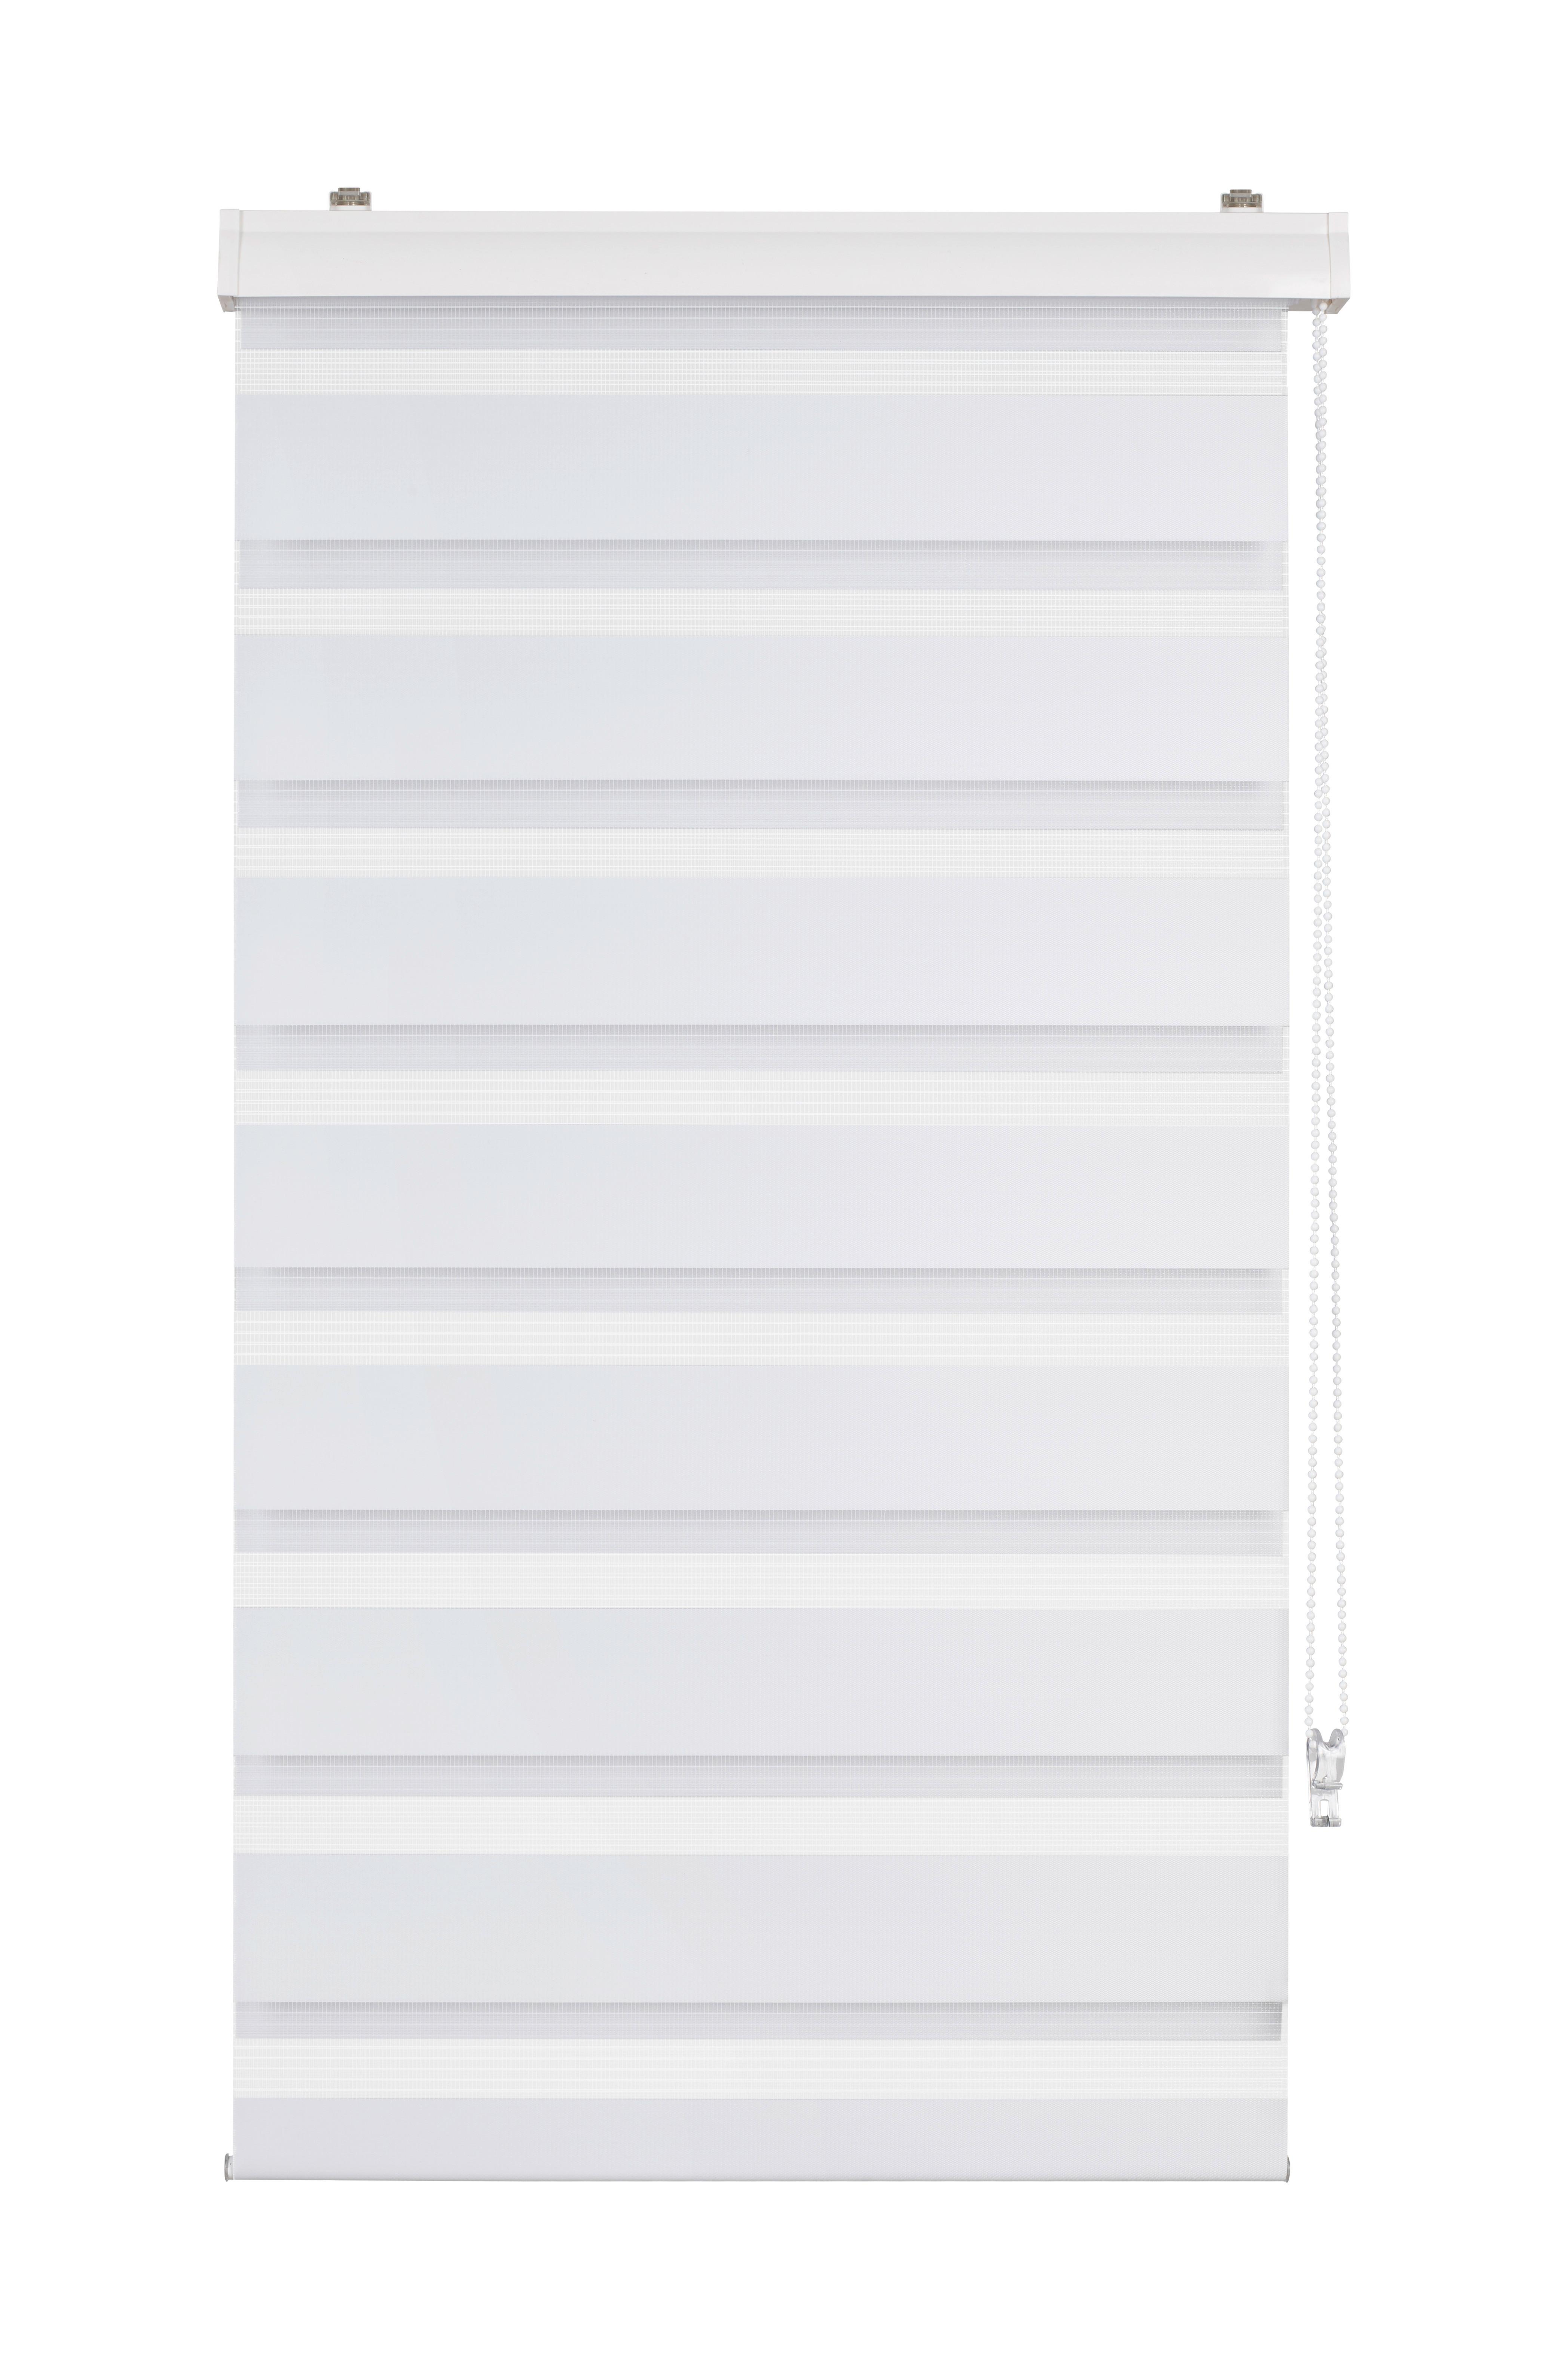 Duorollo Thomas ca. 70x160cm - Weiß, Kunststoff/Textil (70/160cm) - Modern Living